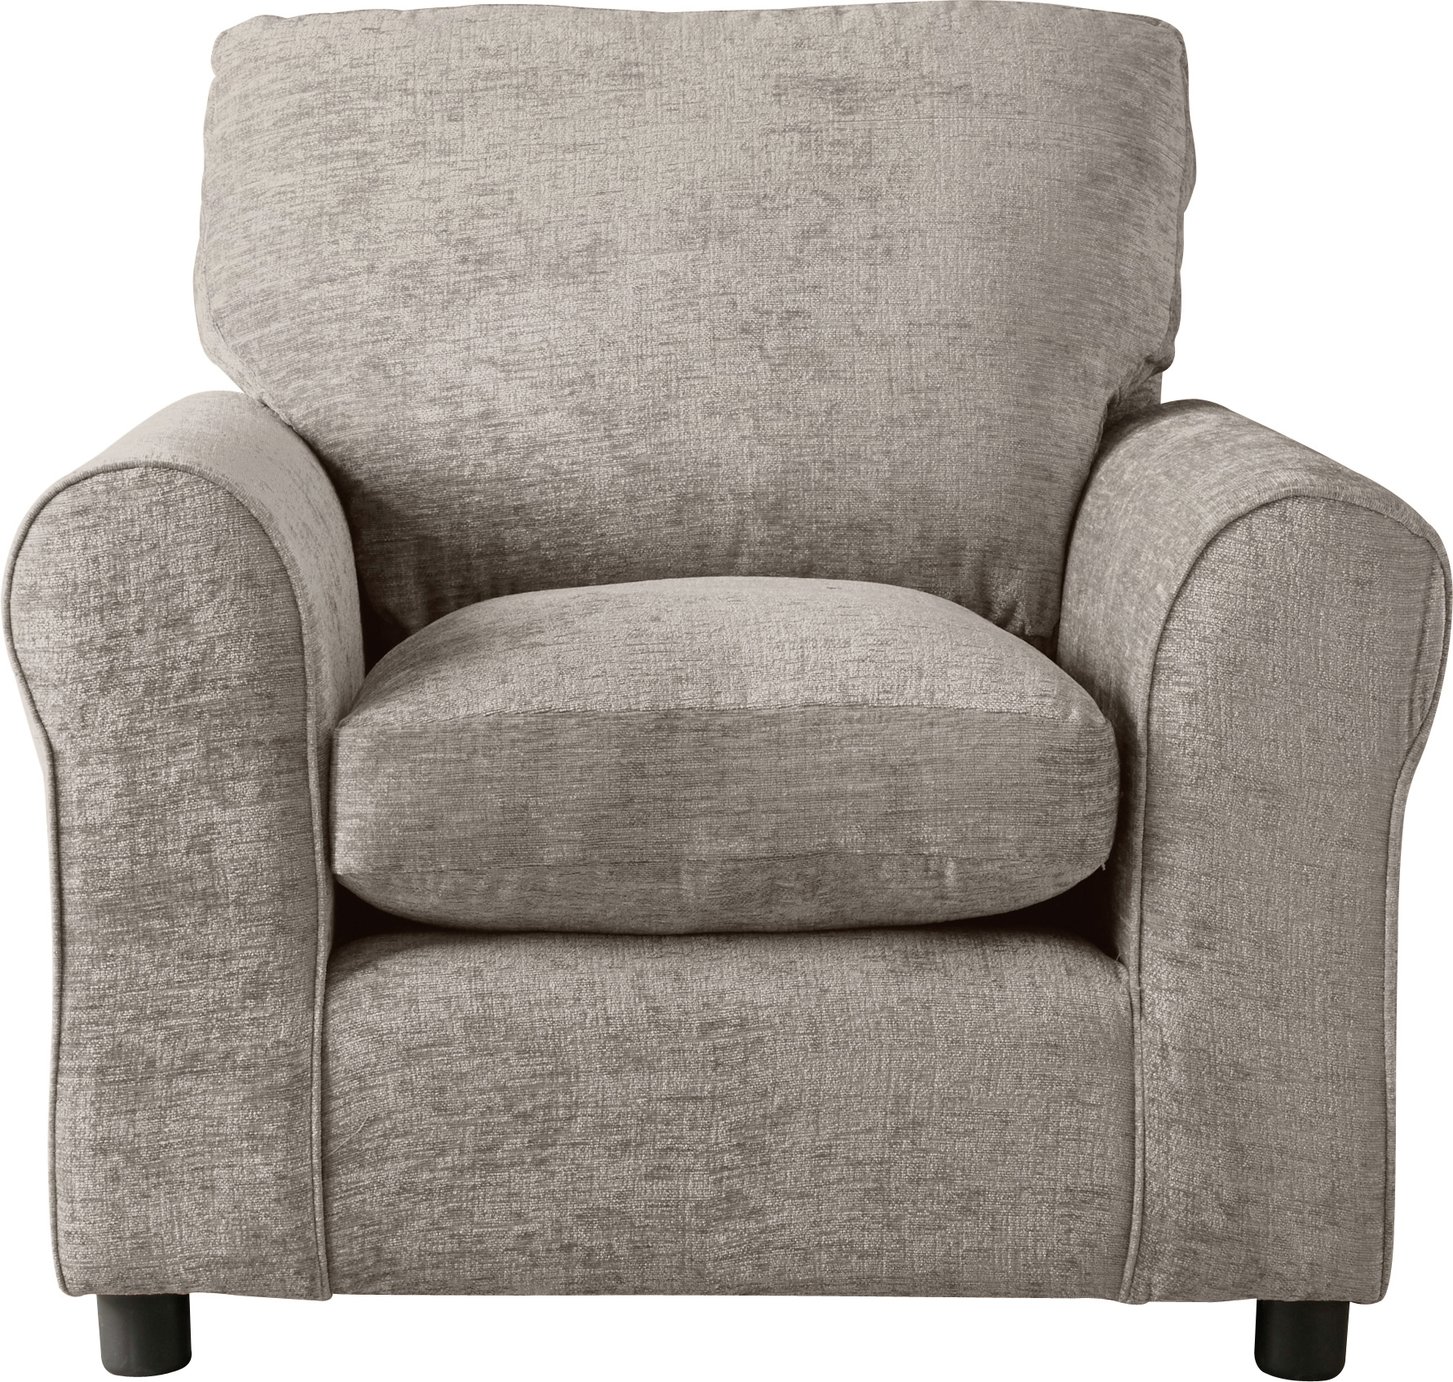 Argos Home Tessa Fabric 3 Seater Sofa and Chair - Mink